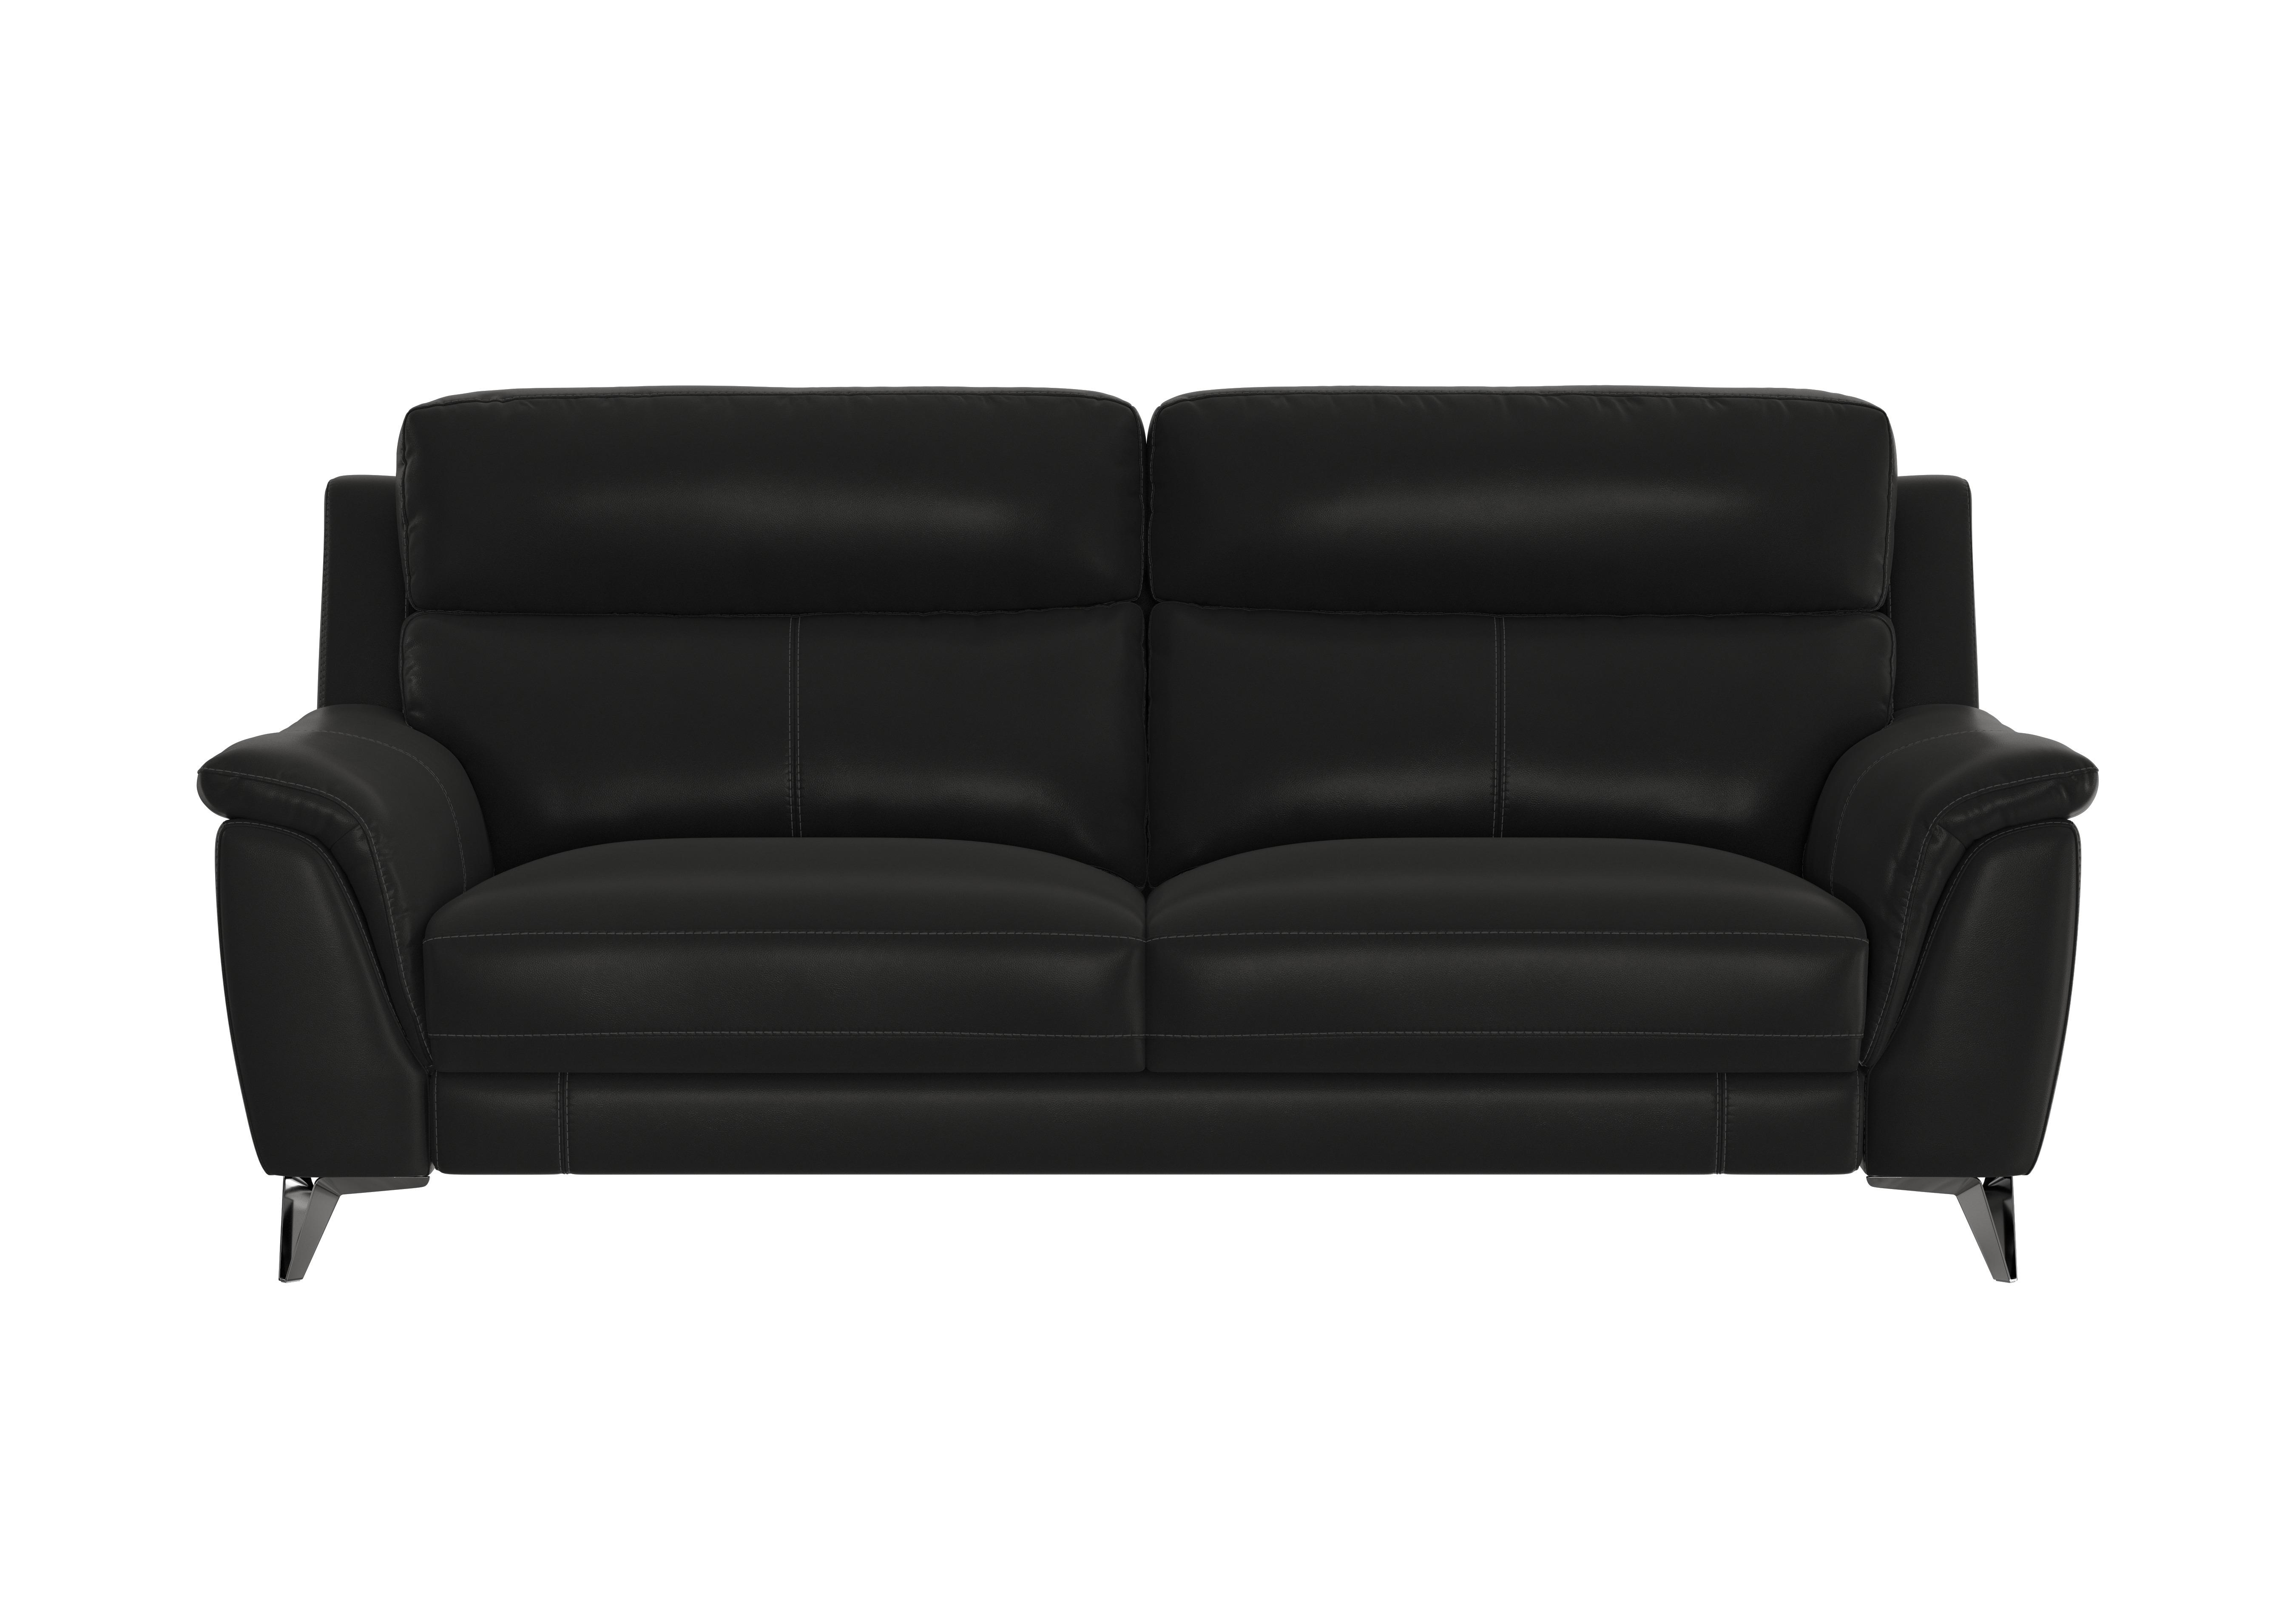 Contempo 3 Seater Leather Sofa in Bv-3500 Classic Black on Furniture Village